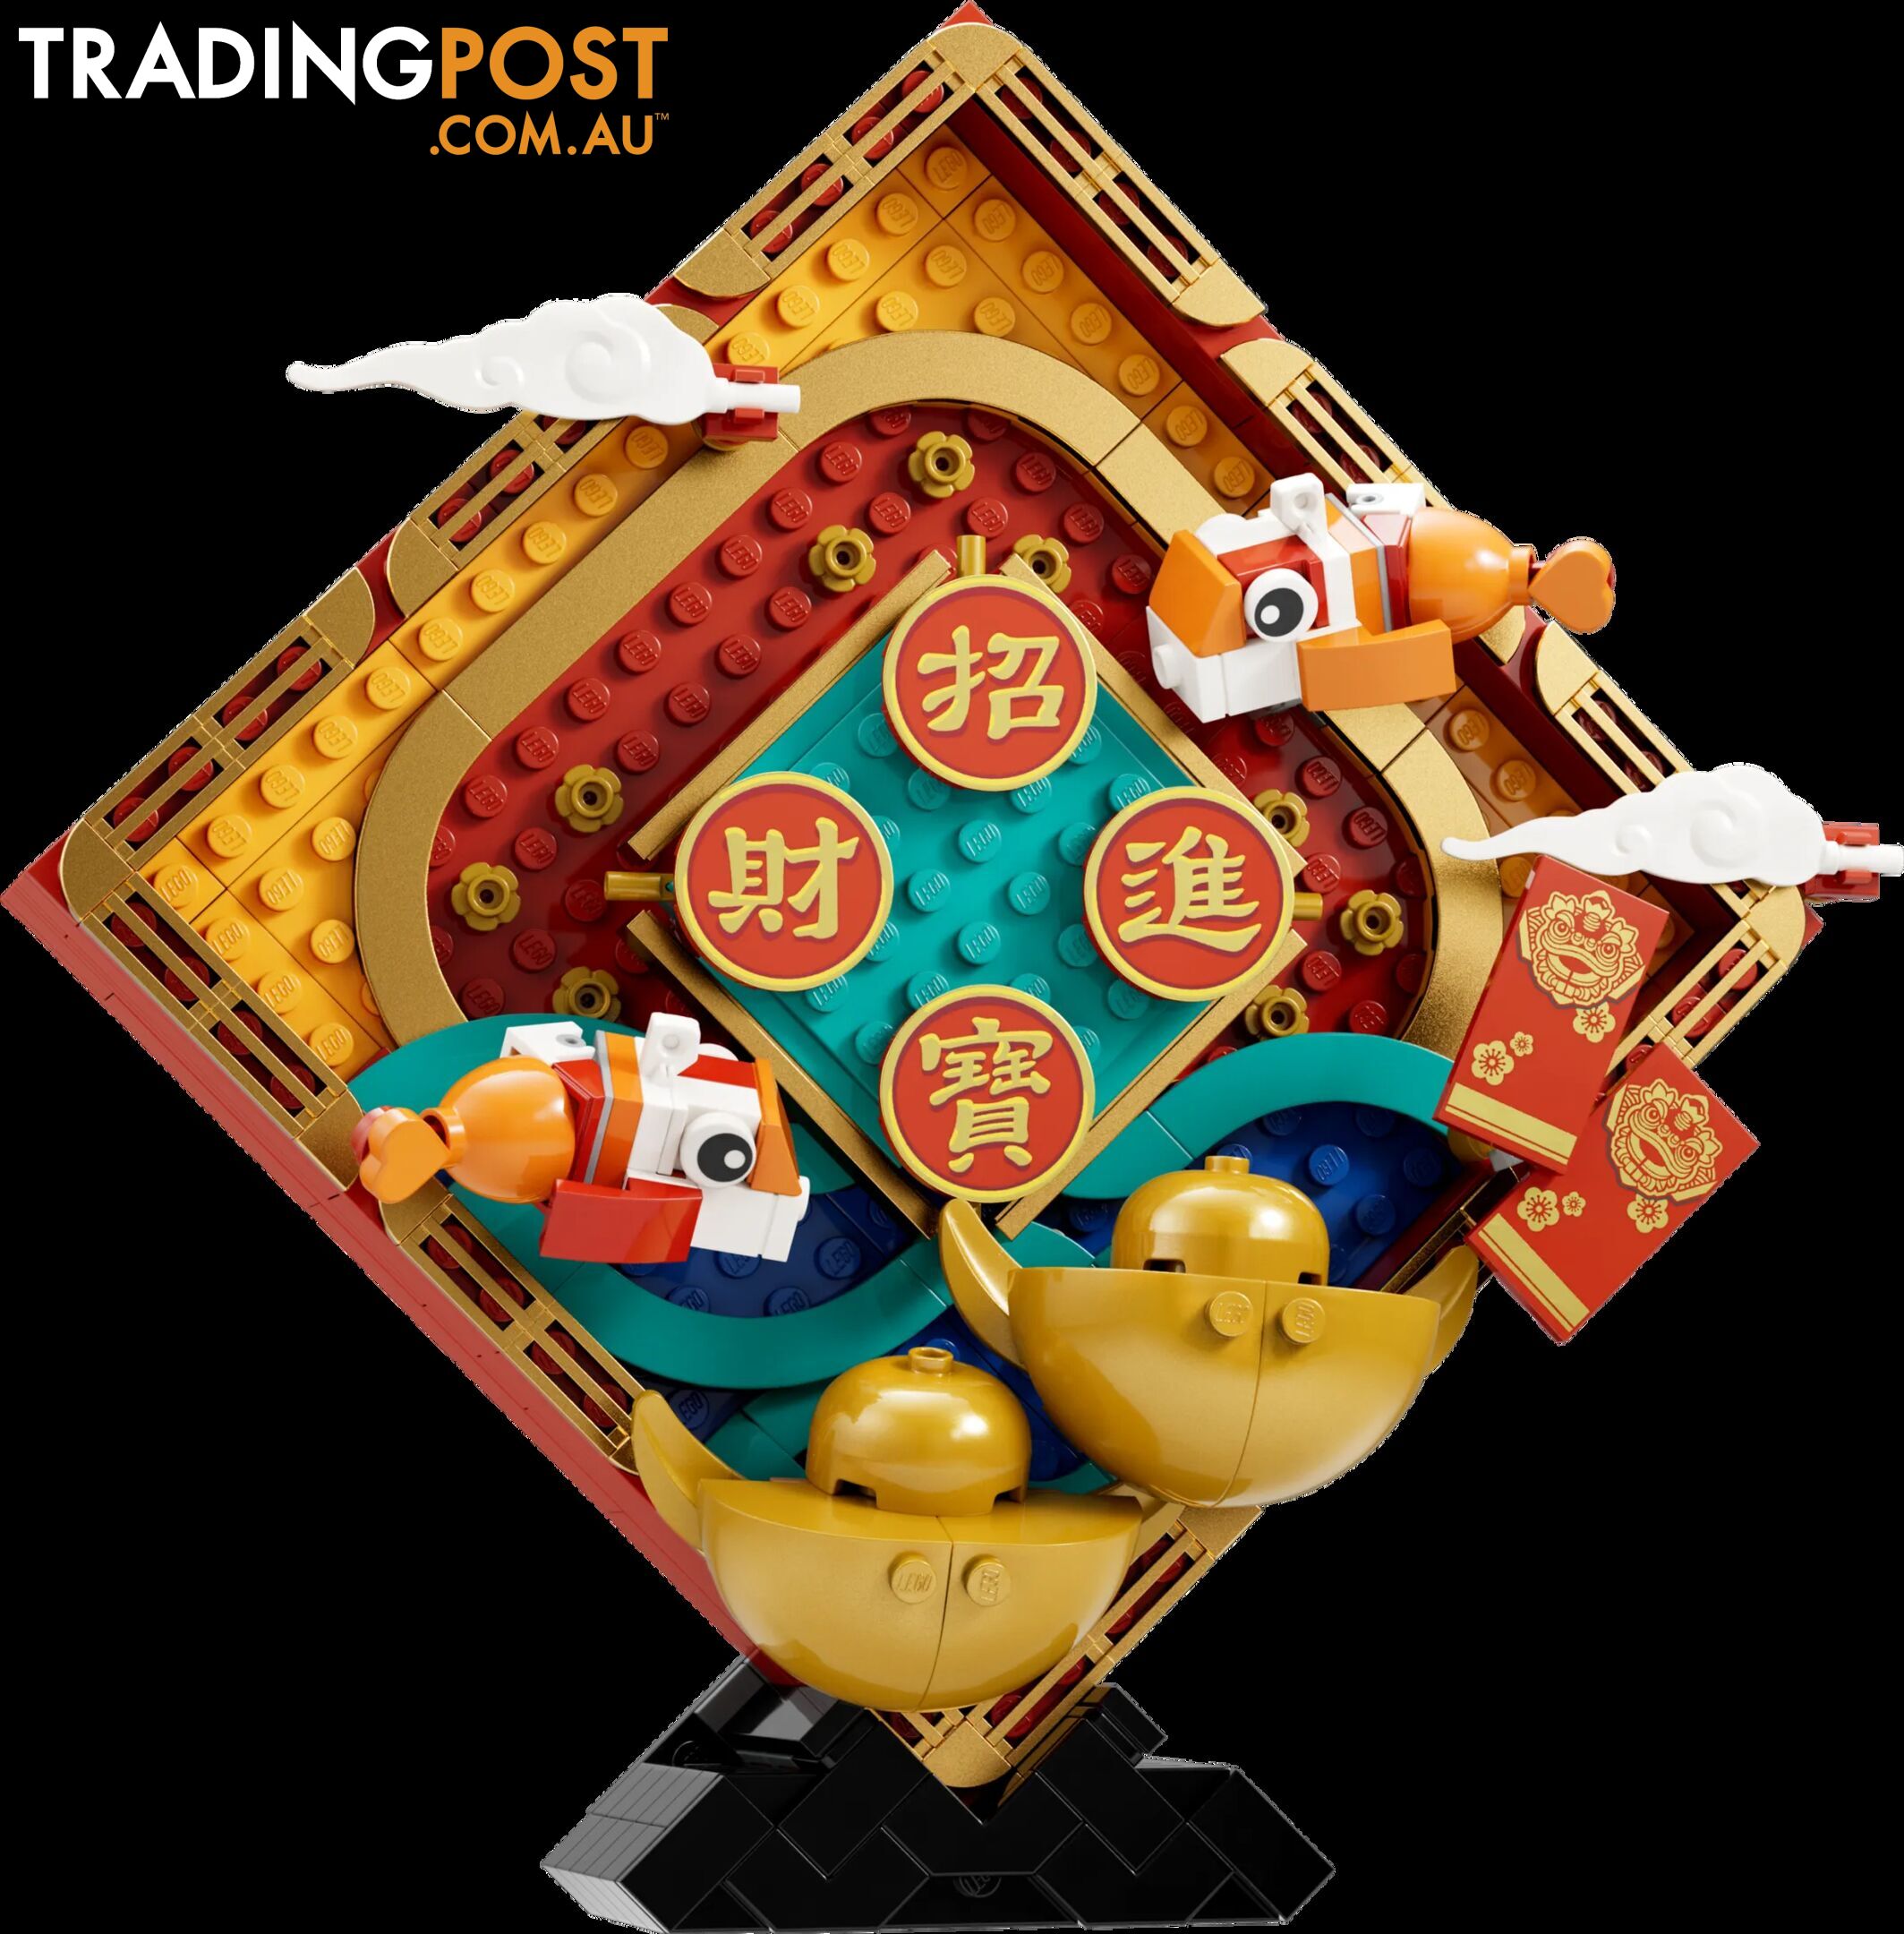 LEGO 80110 Lunar New Year Display - Chinese Festivals - 5702017415611